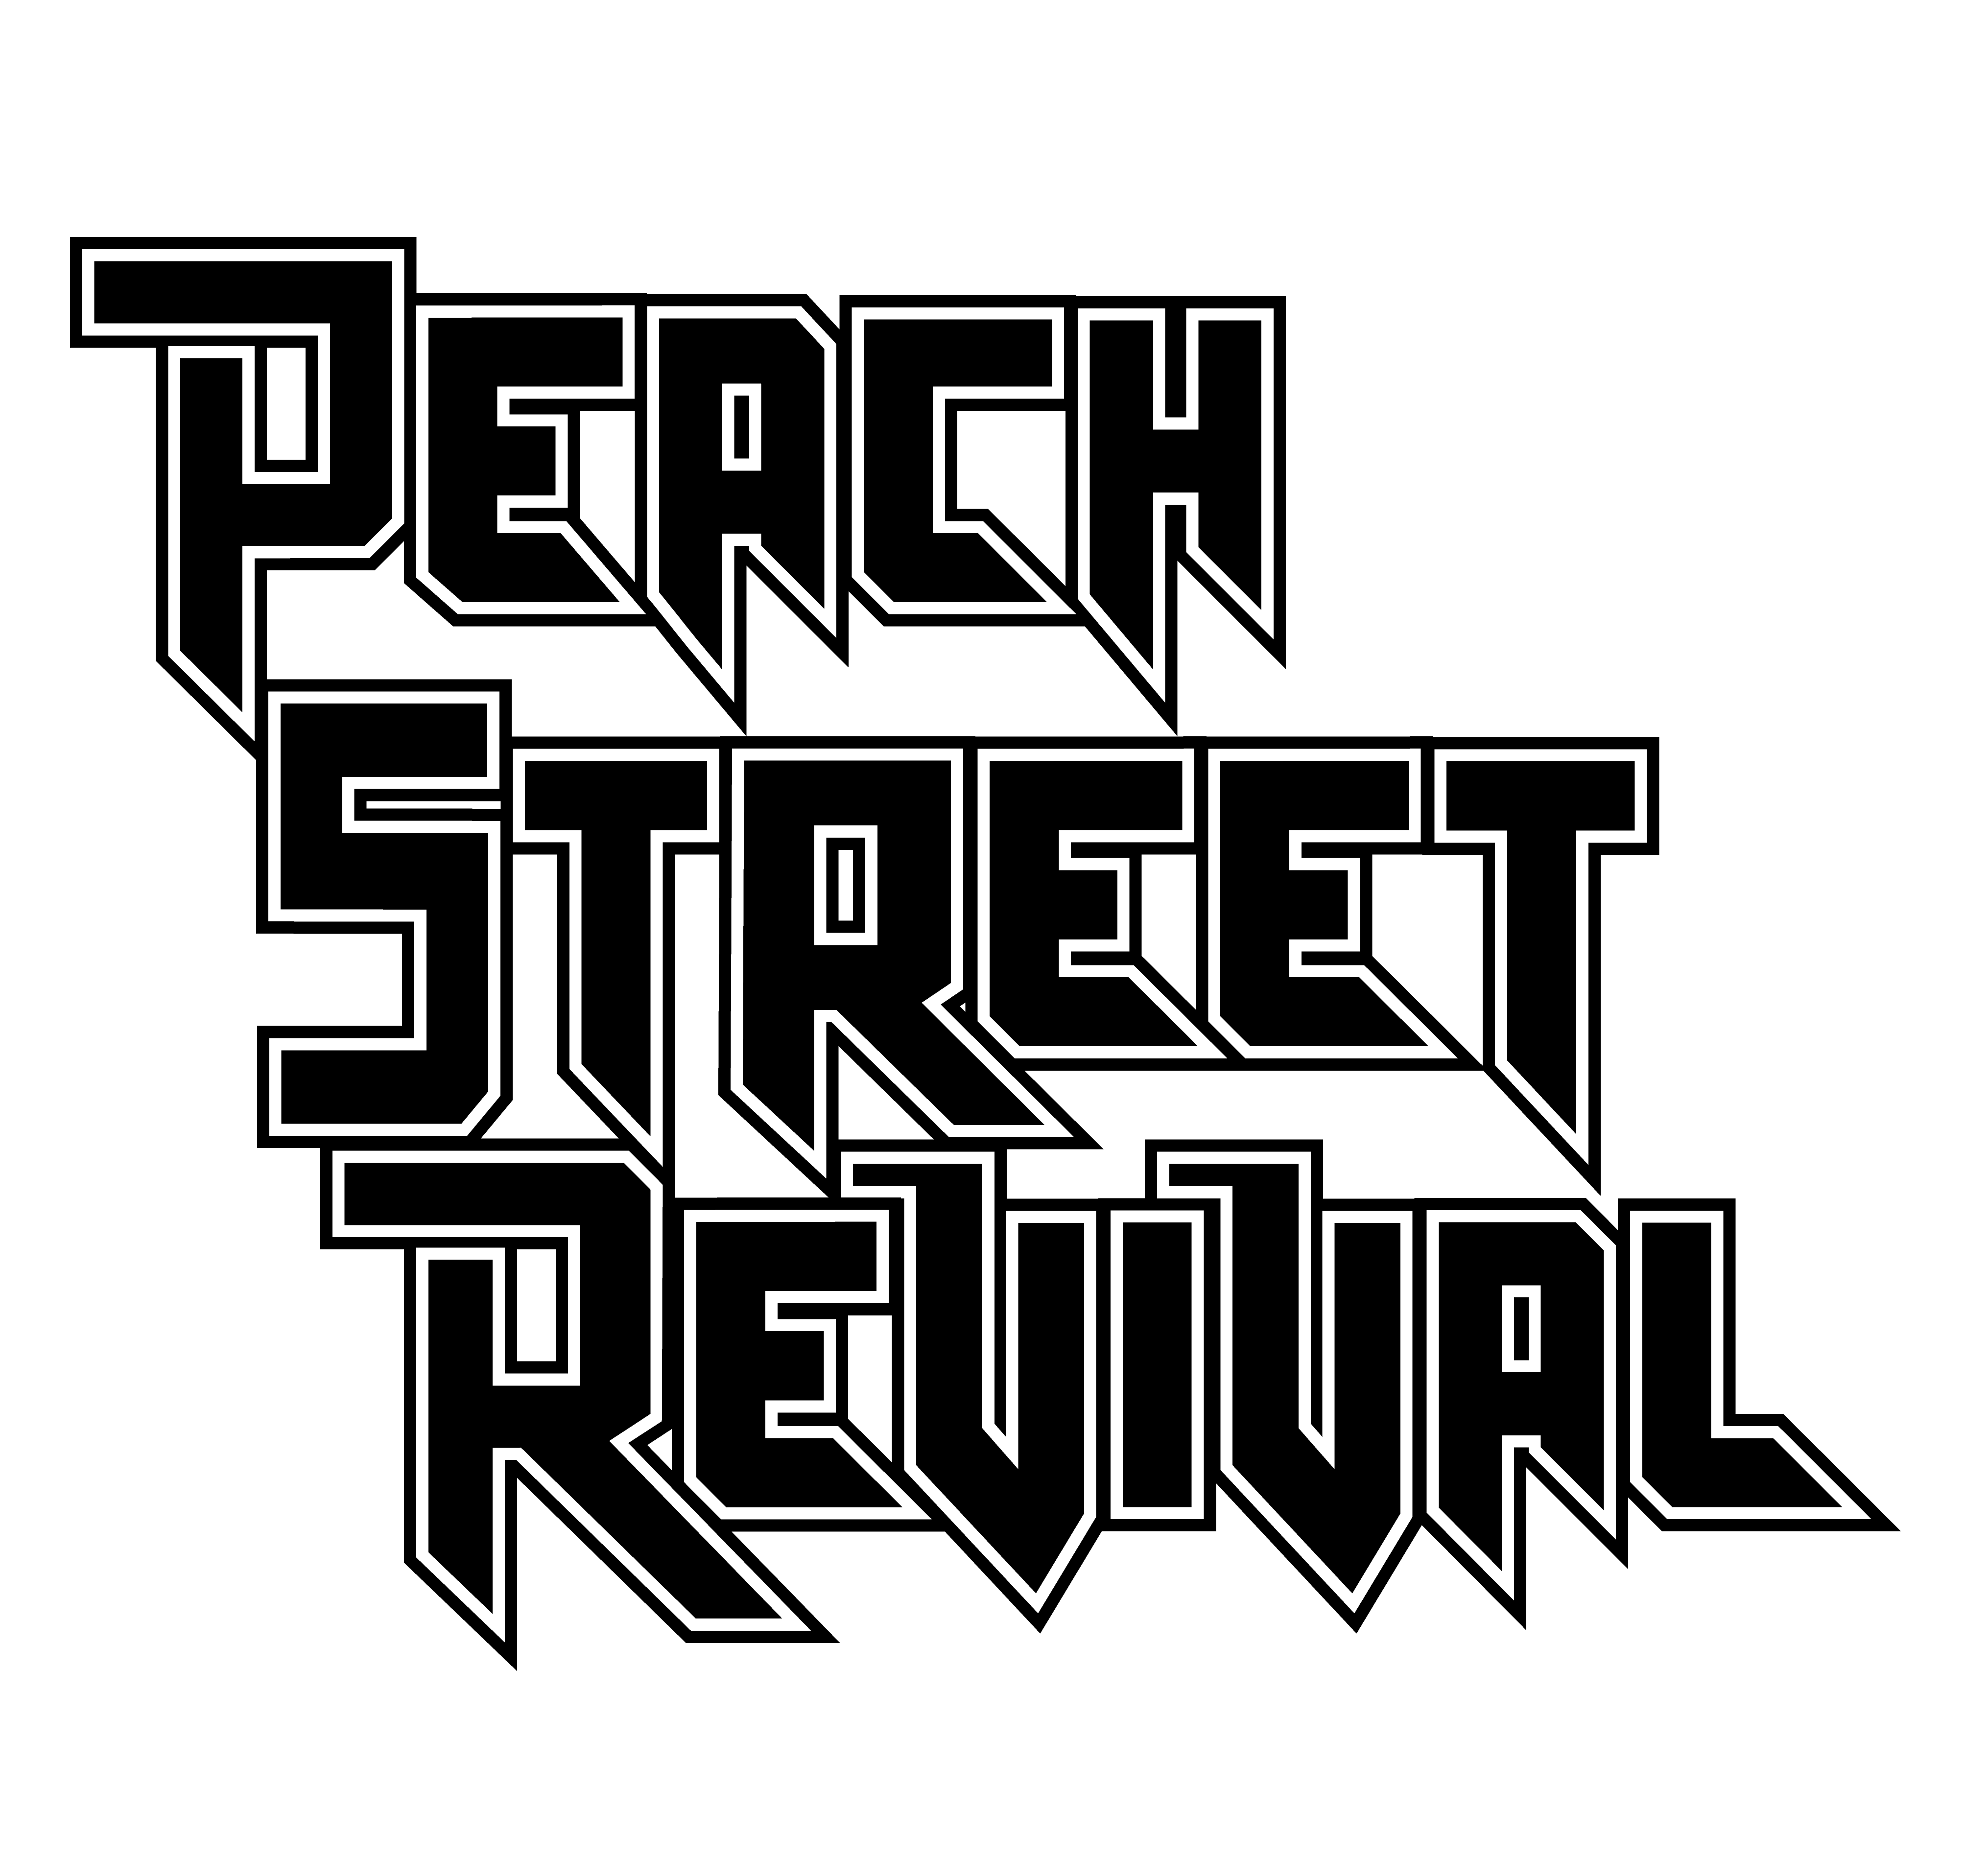 Peach Street Revival